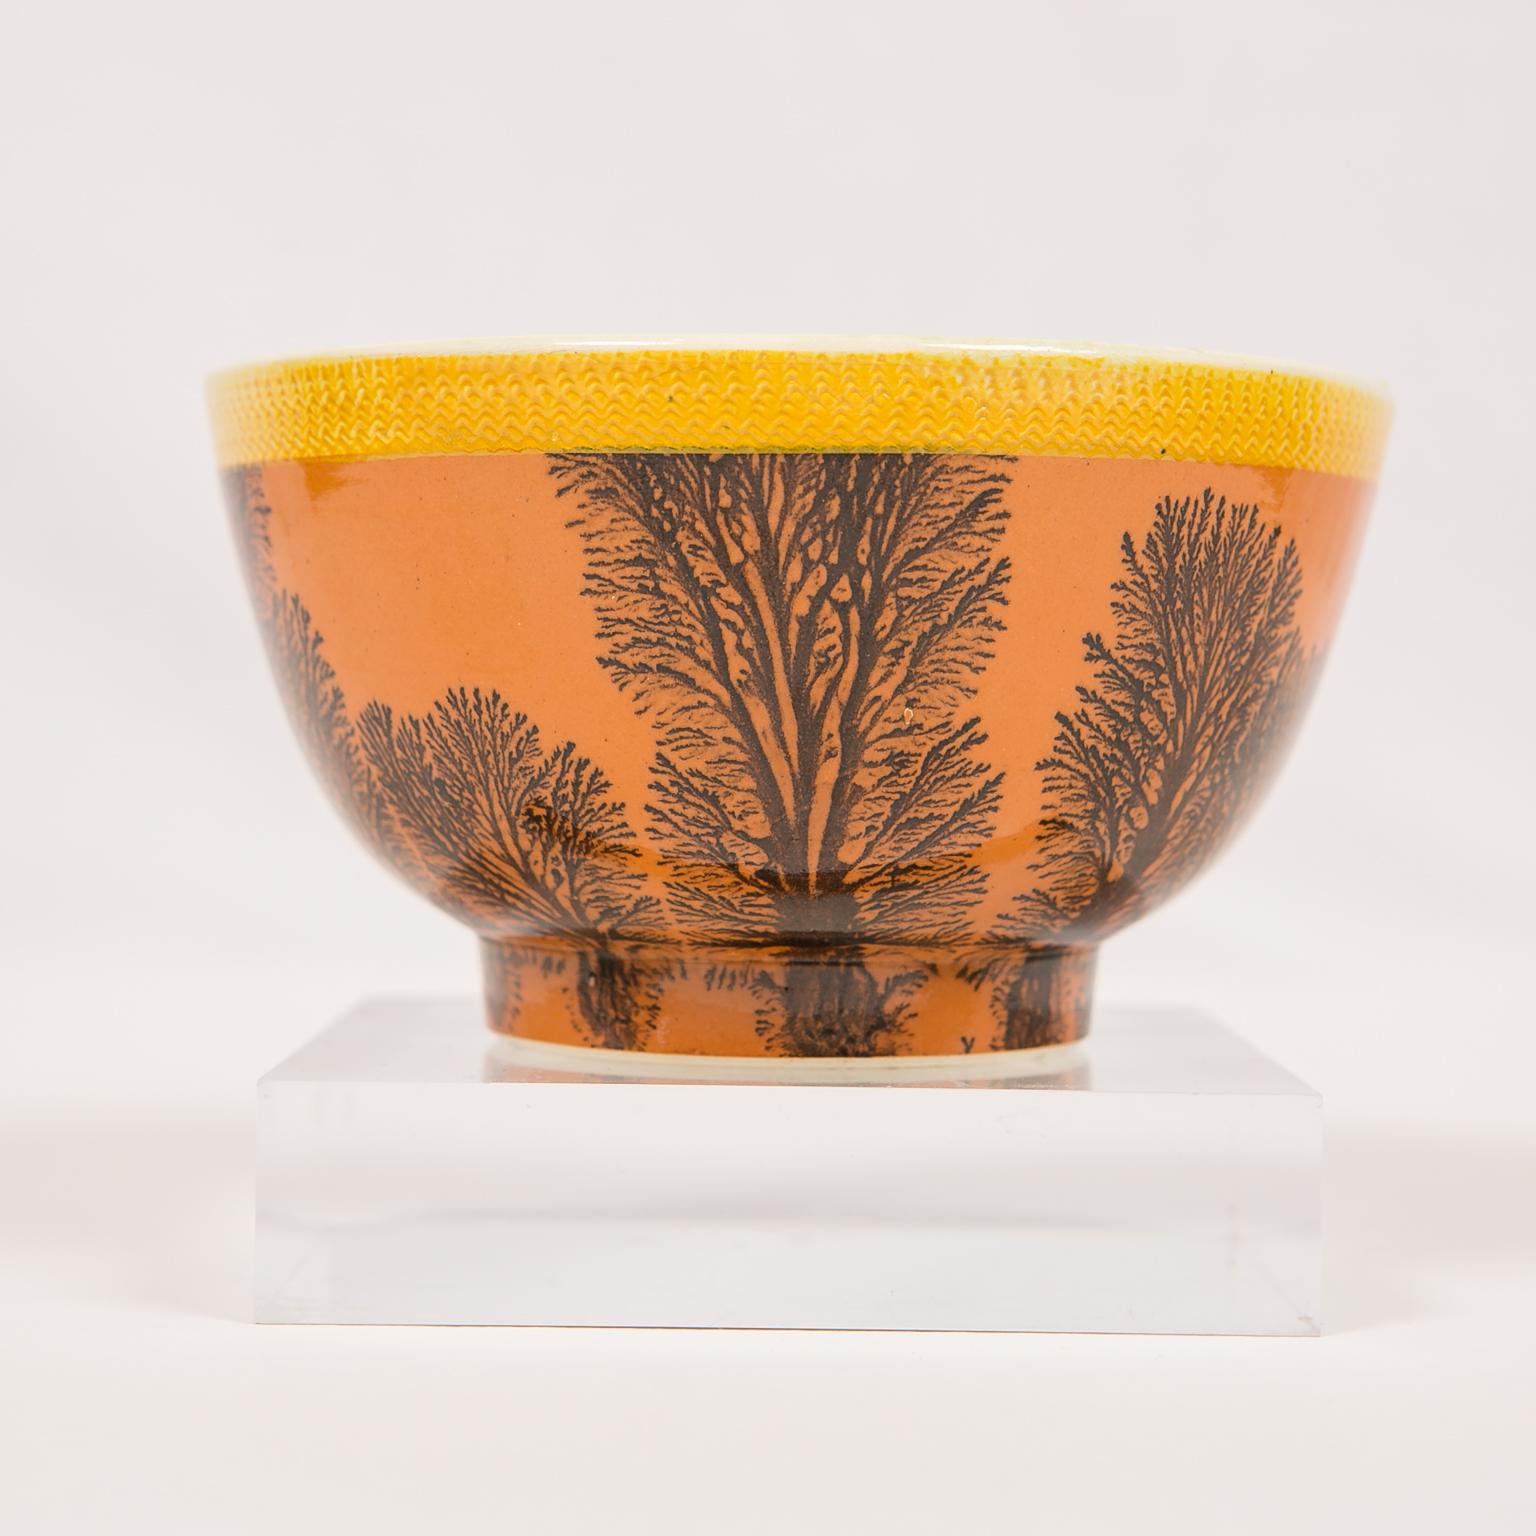 19th Century Creamware Mochaware Bowl Decorated with Trees circa 1800